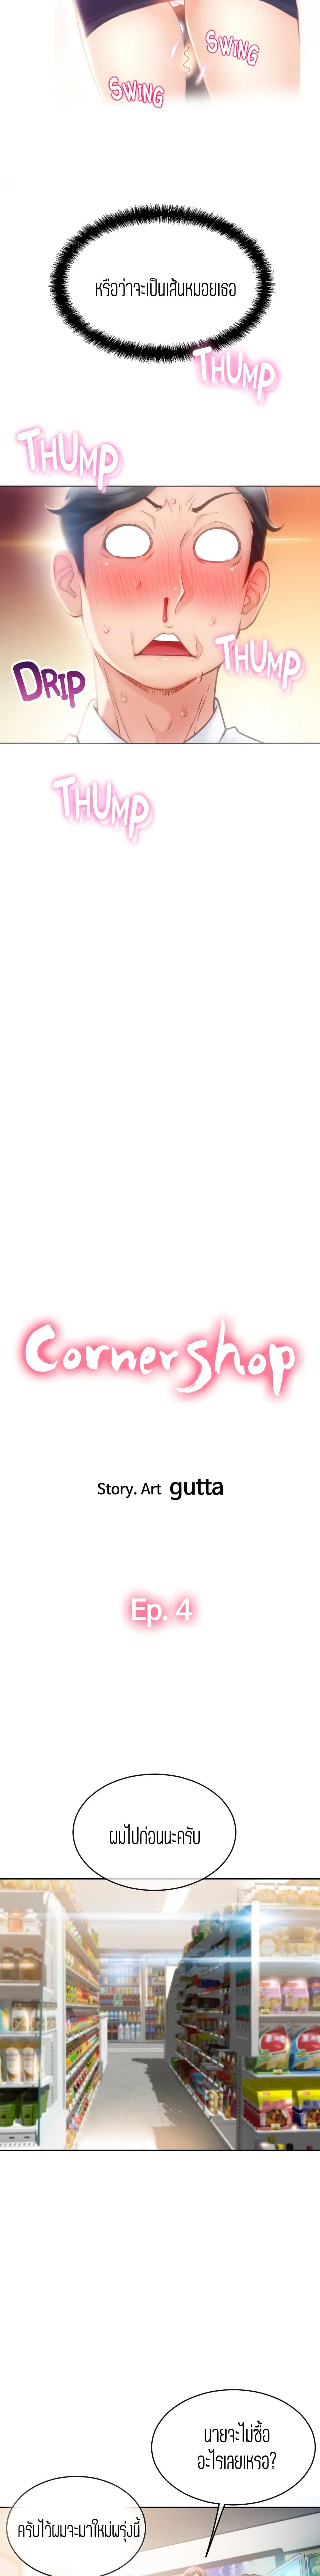 Corner Shop 4-4